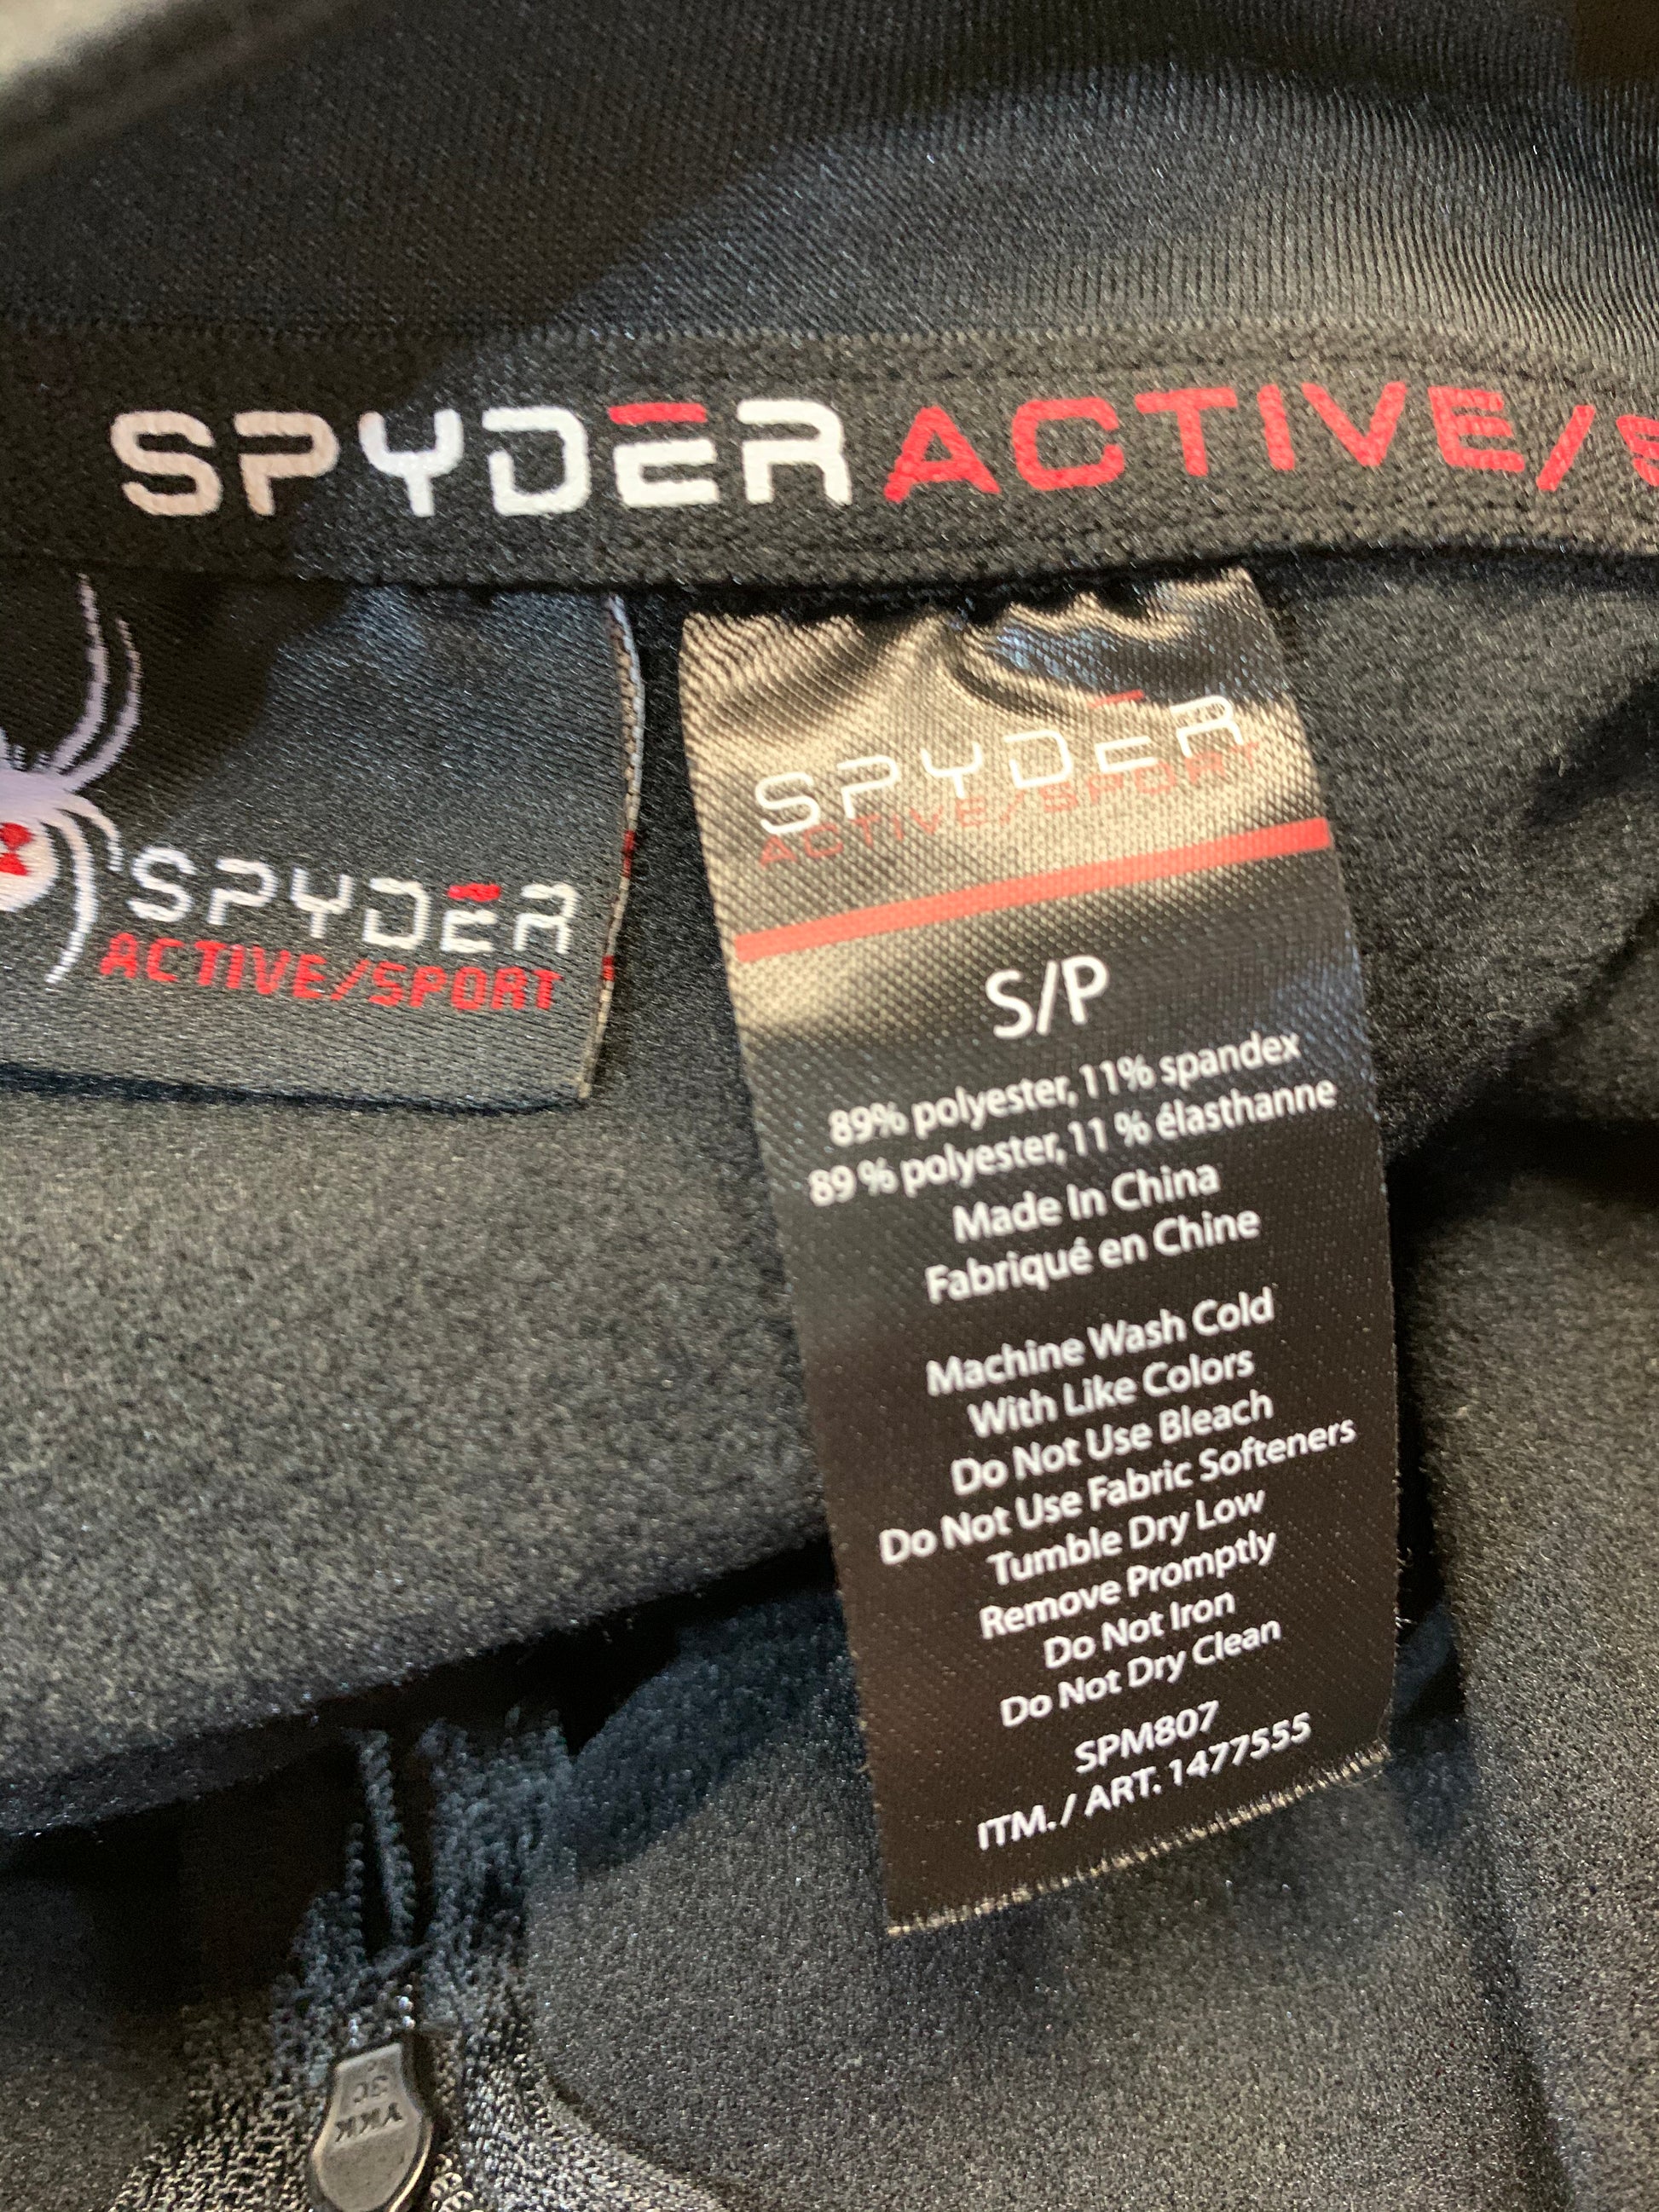 Spyder Active long sleeve quarter zip Top - small – PoppinTags